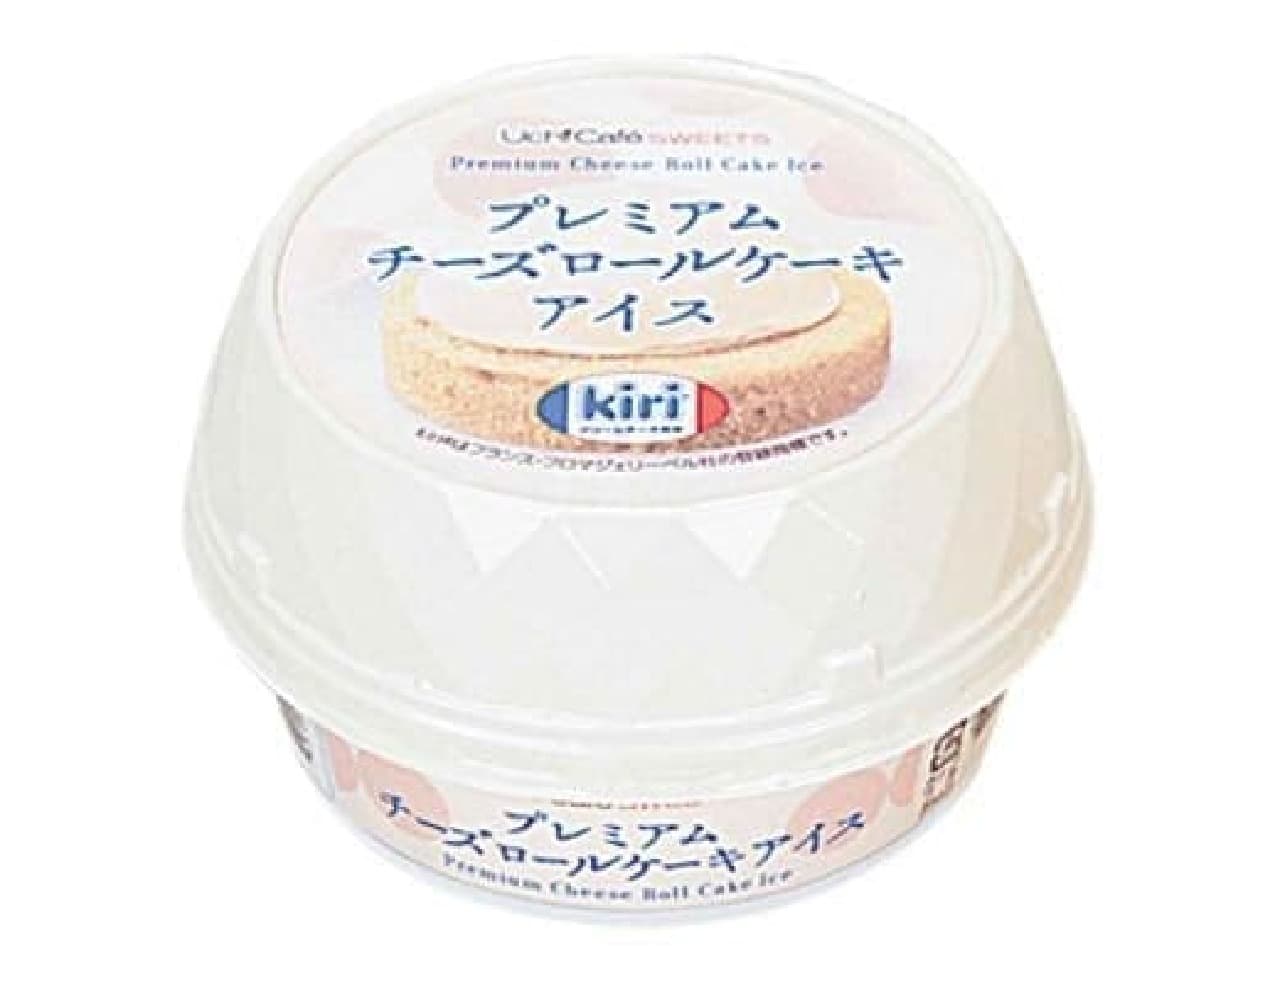 Lawson "Premium Cheese Roll Cake Ice"